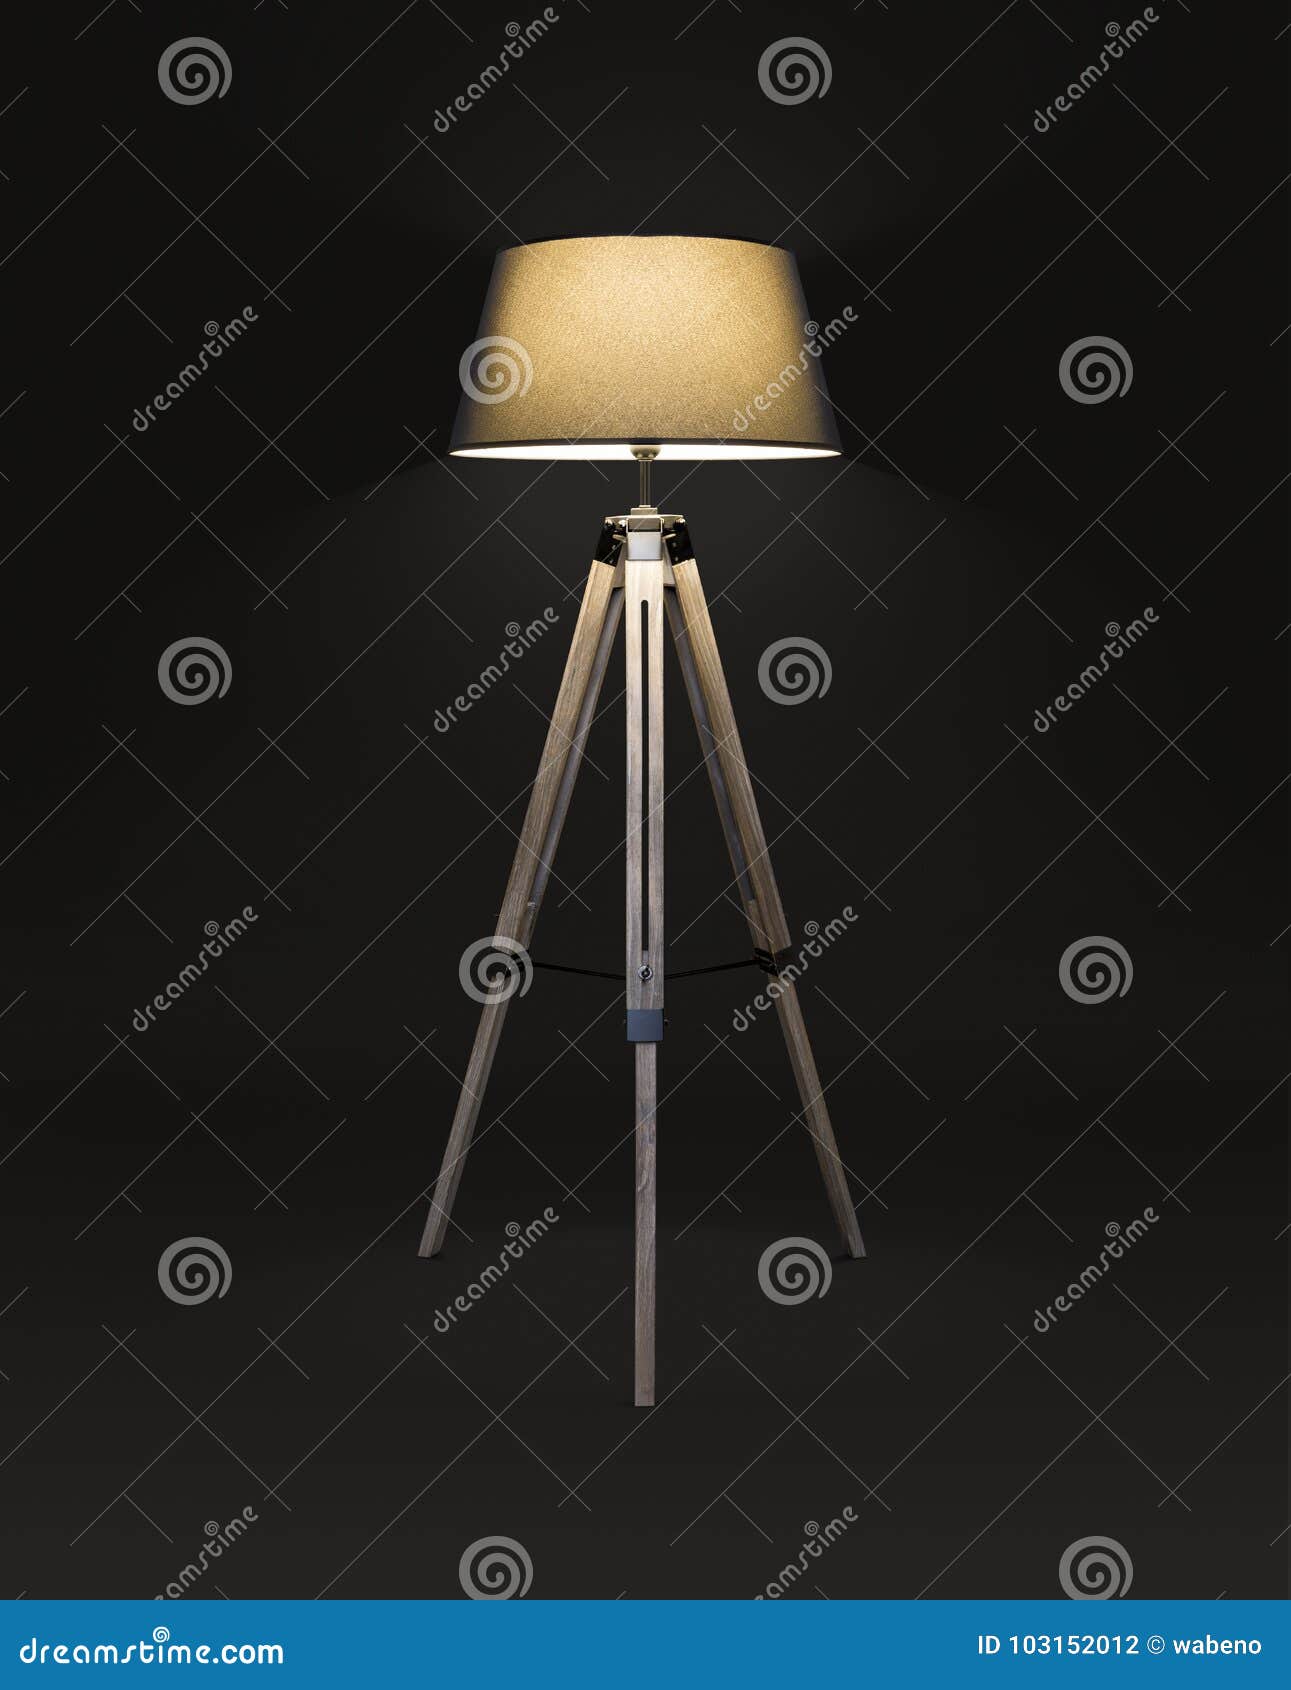 Three wooden floor lamp